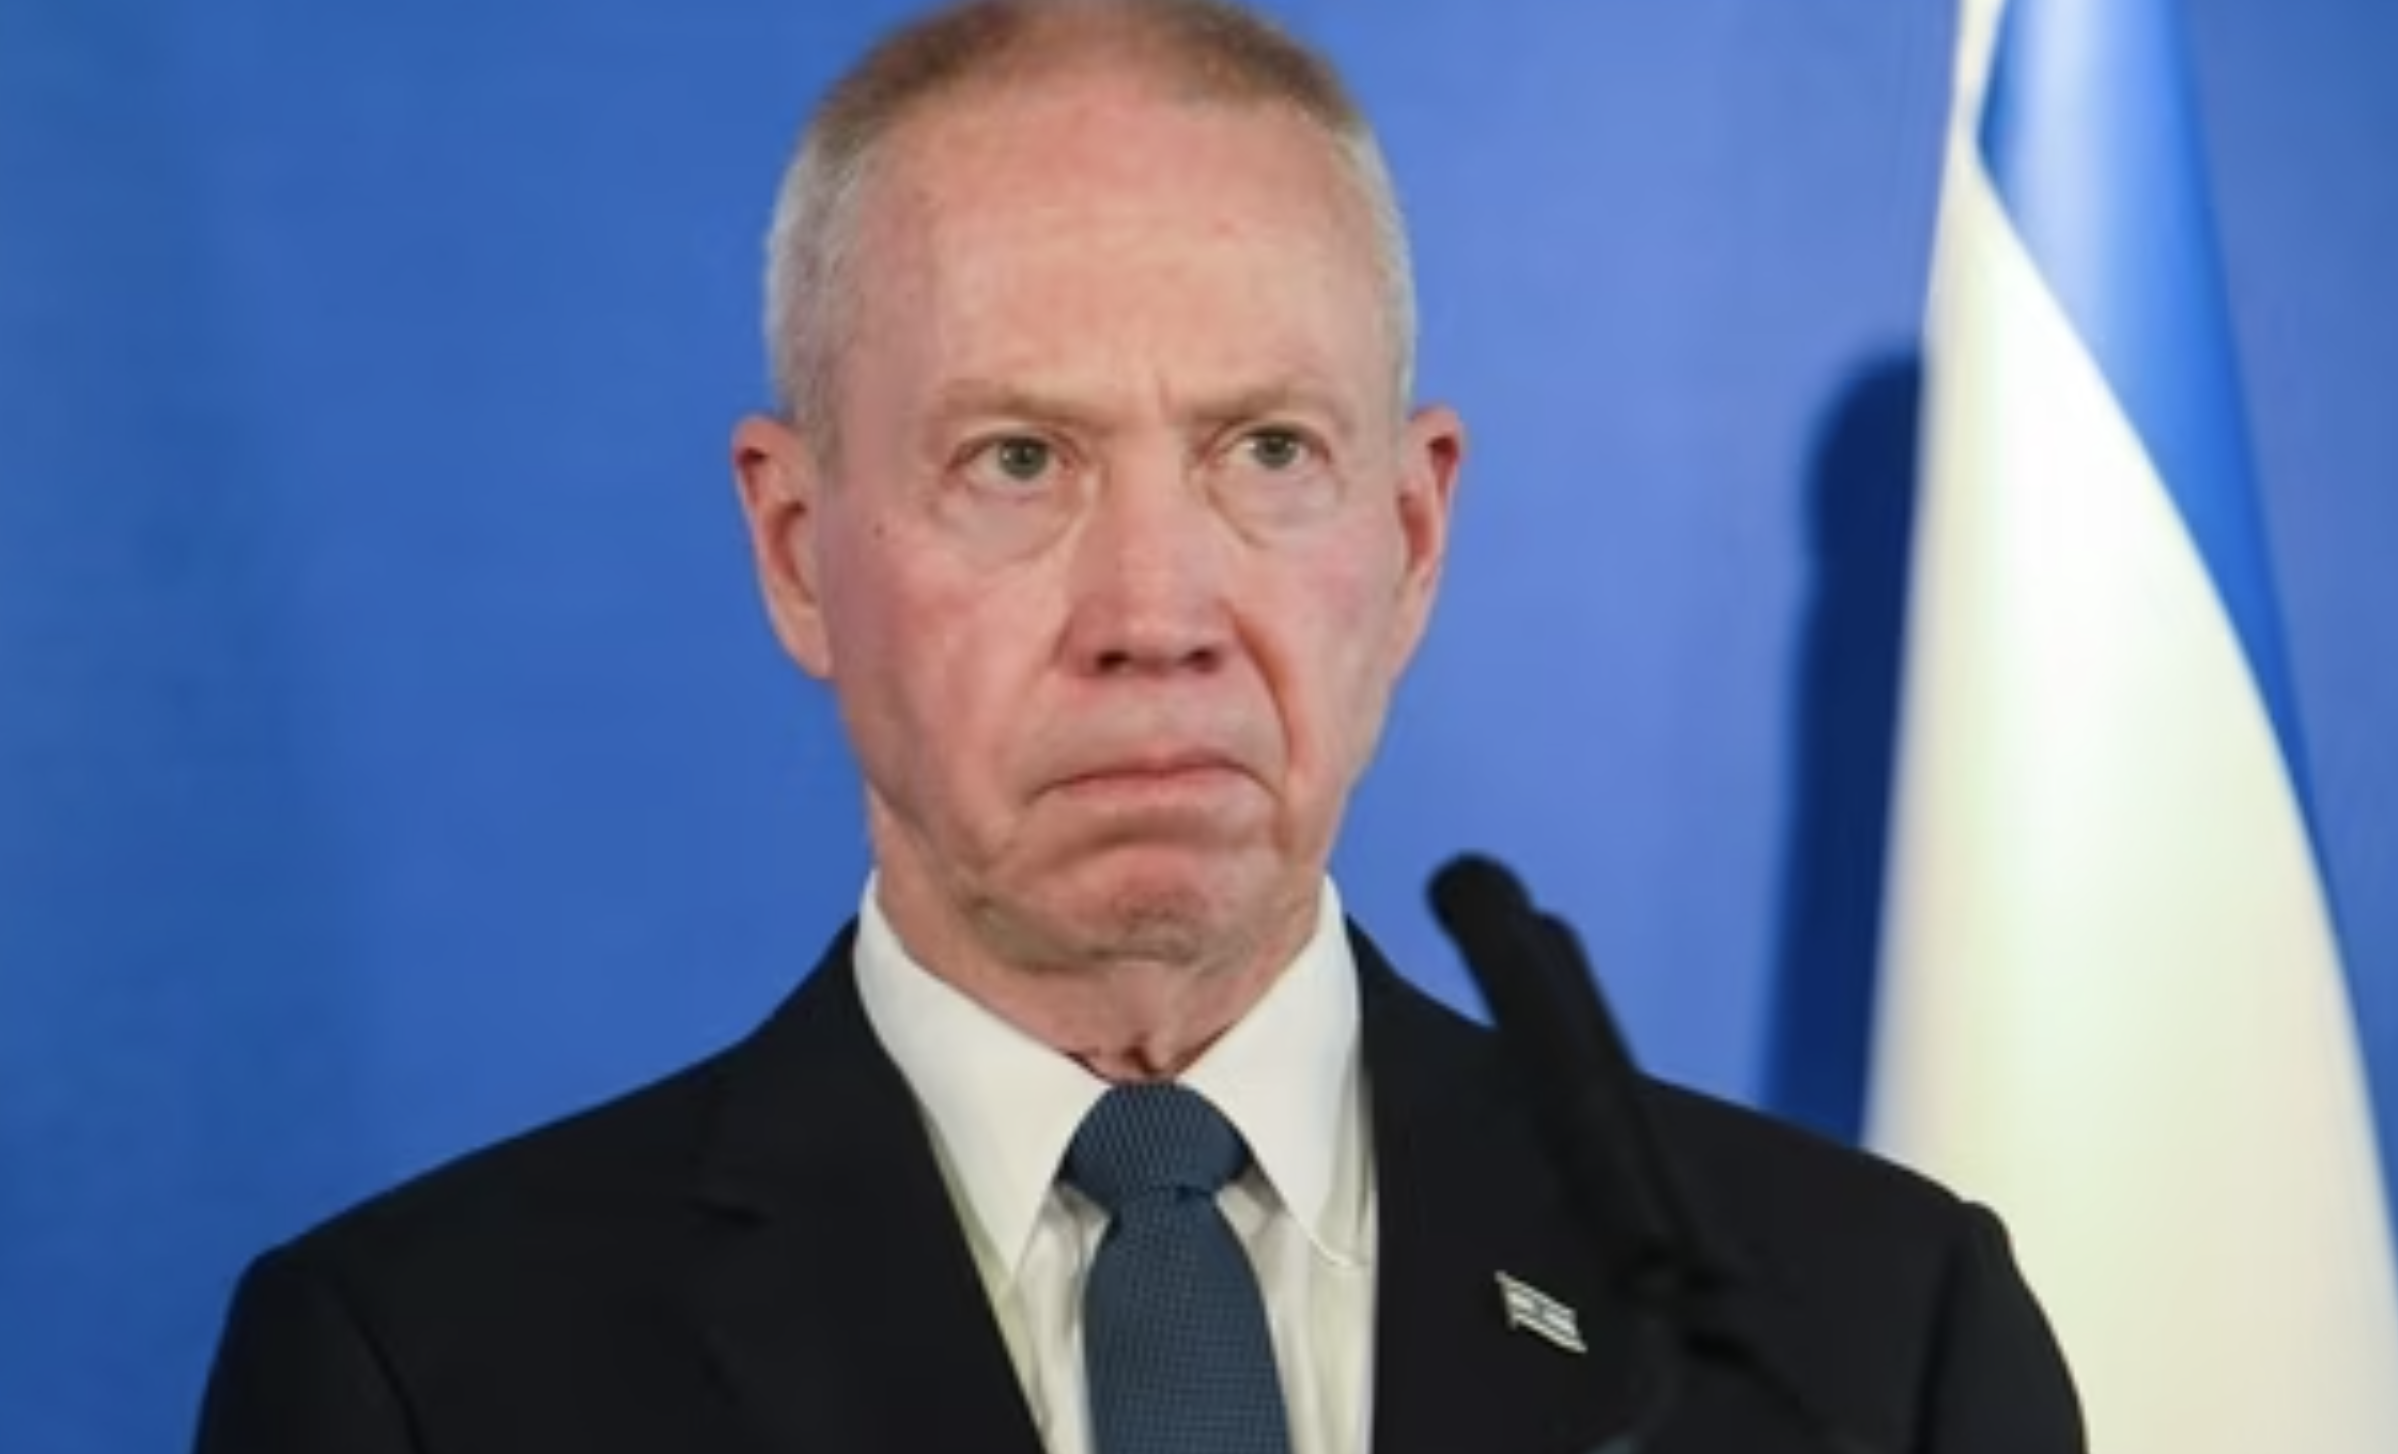 Israel Defense Minister